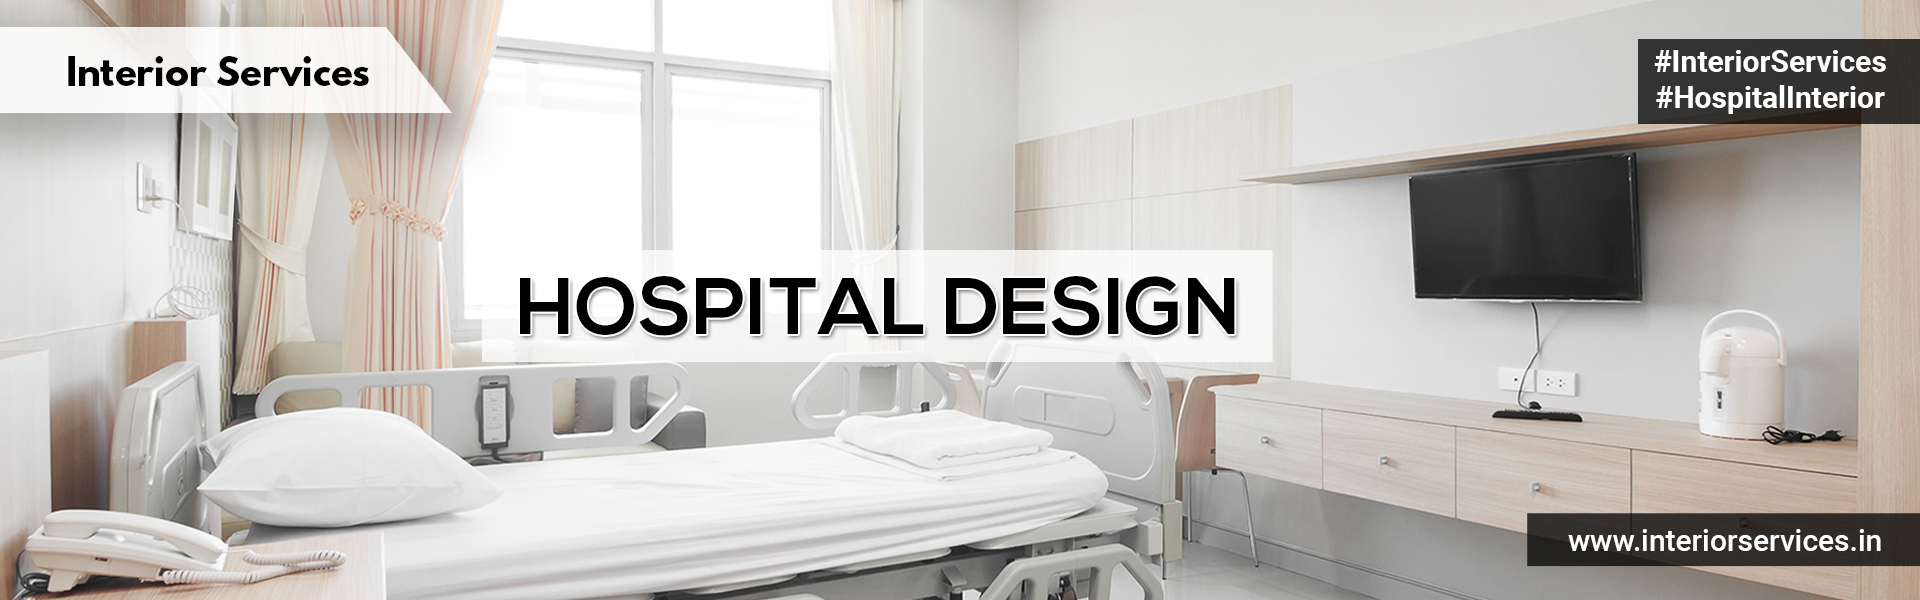 Interior Services Hospital Design Image